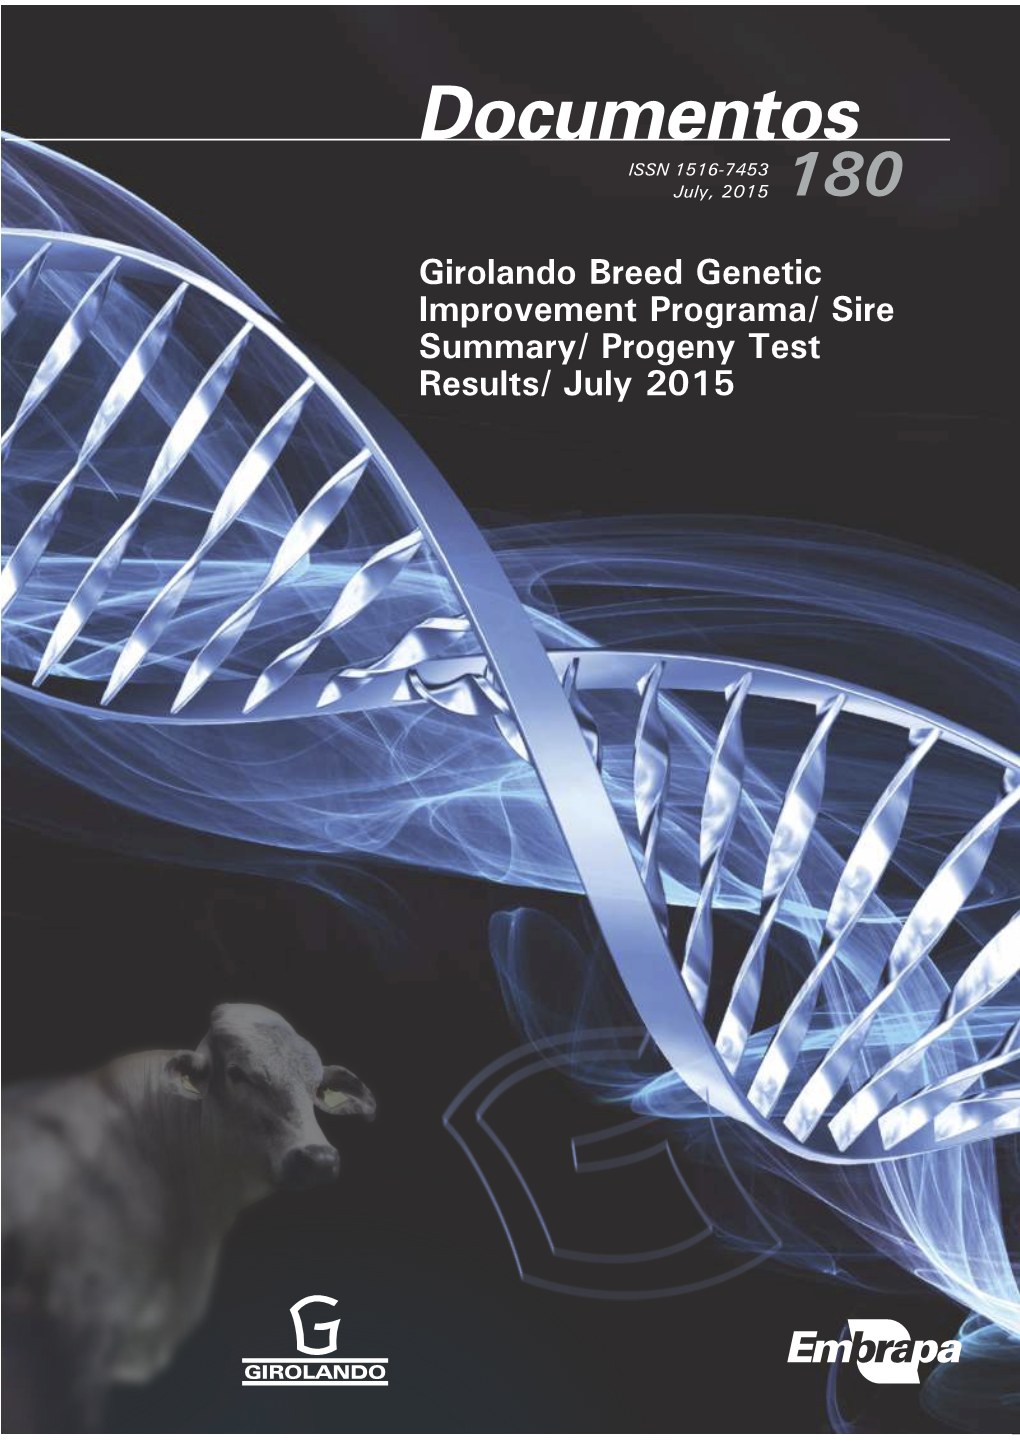 Girolando Breed Genetic Summary 180.Indd